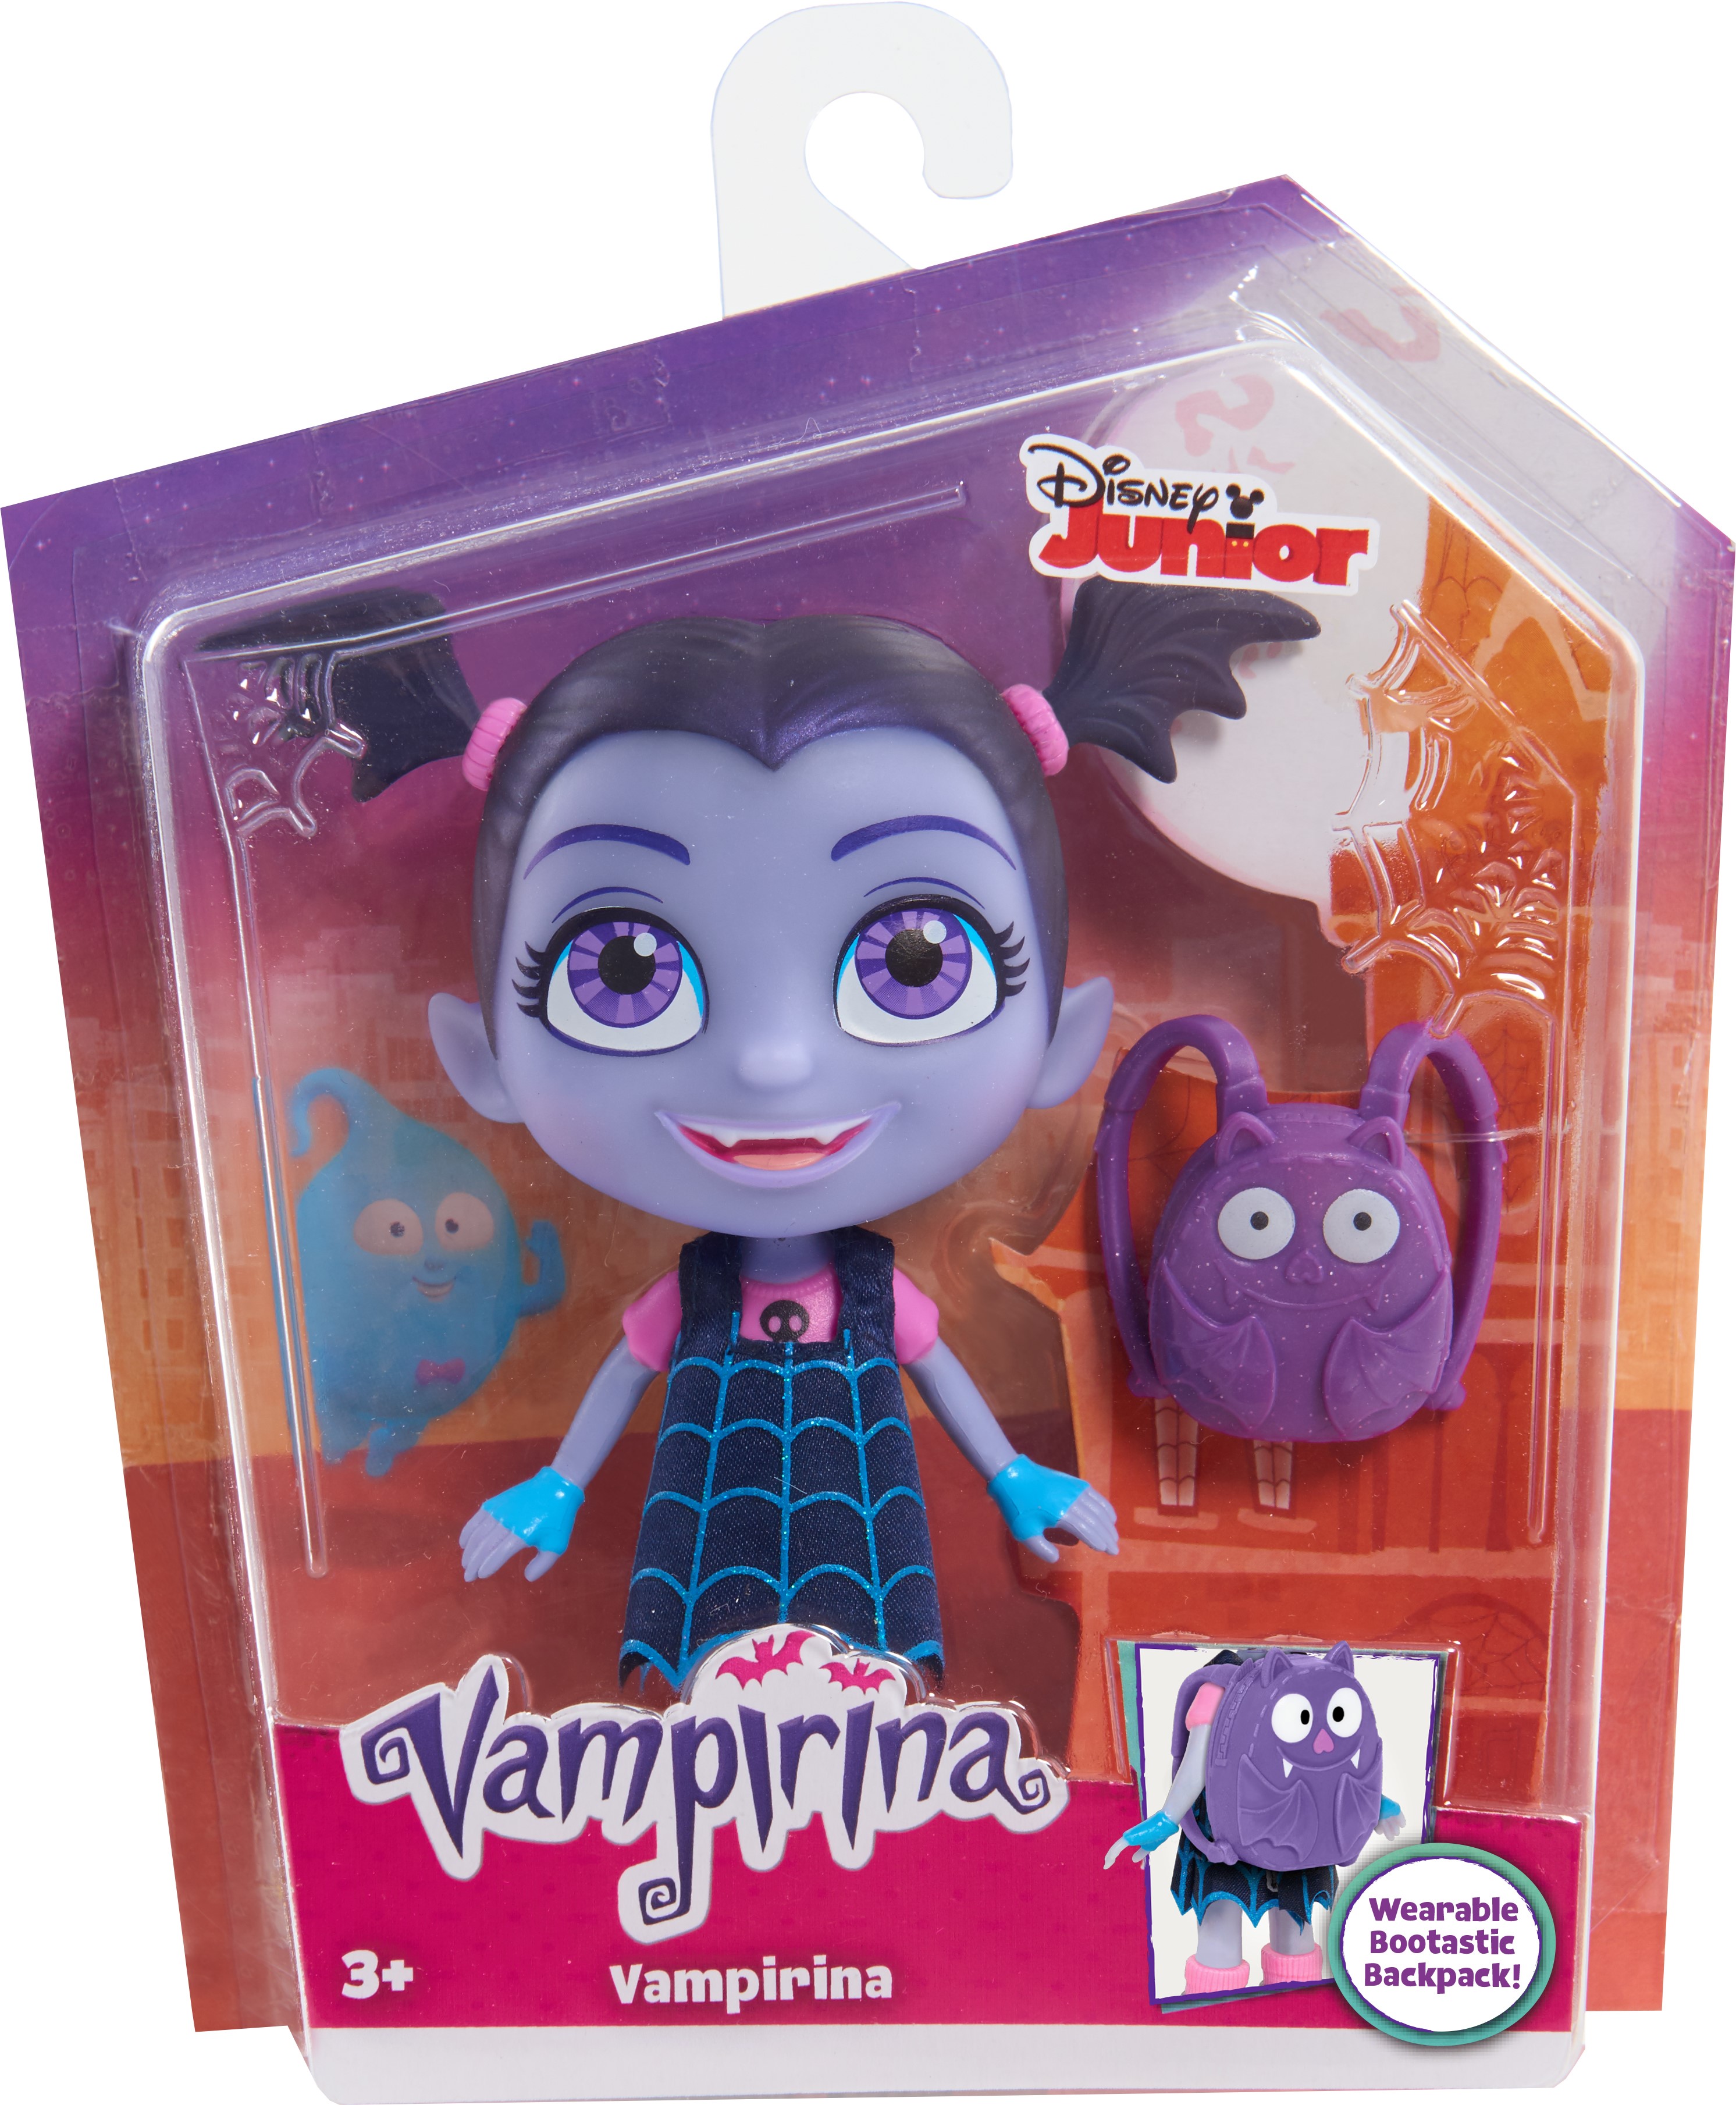 Vampirina ghoul girl doll - vampirina - image 1 of 4